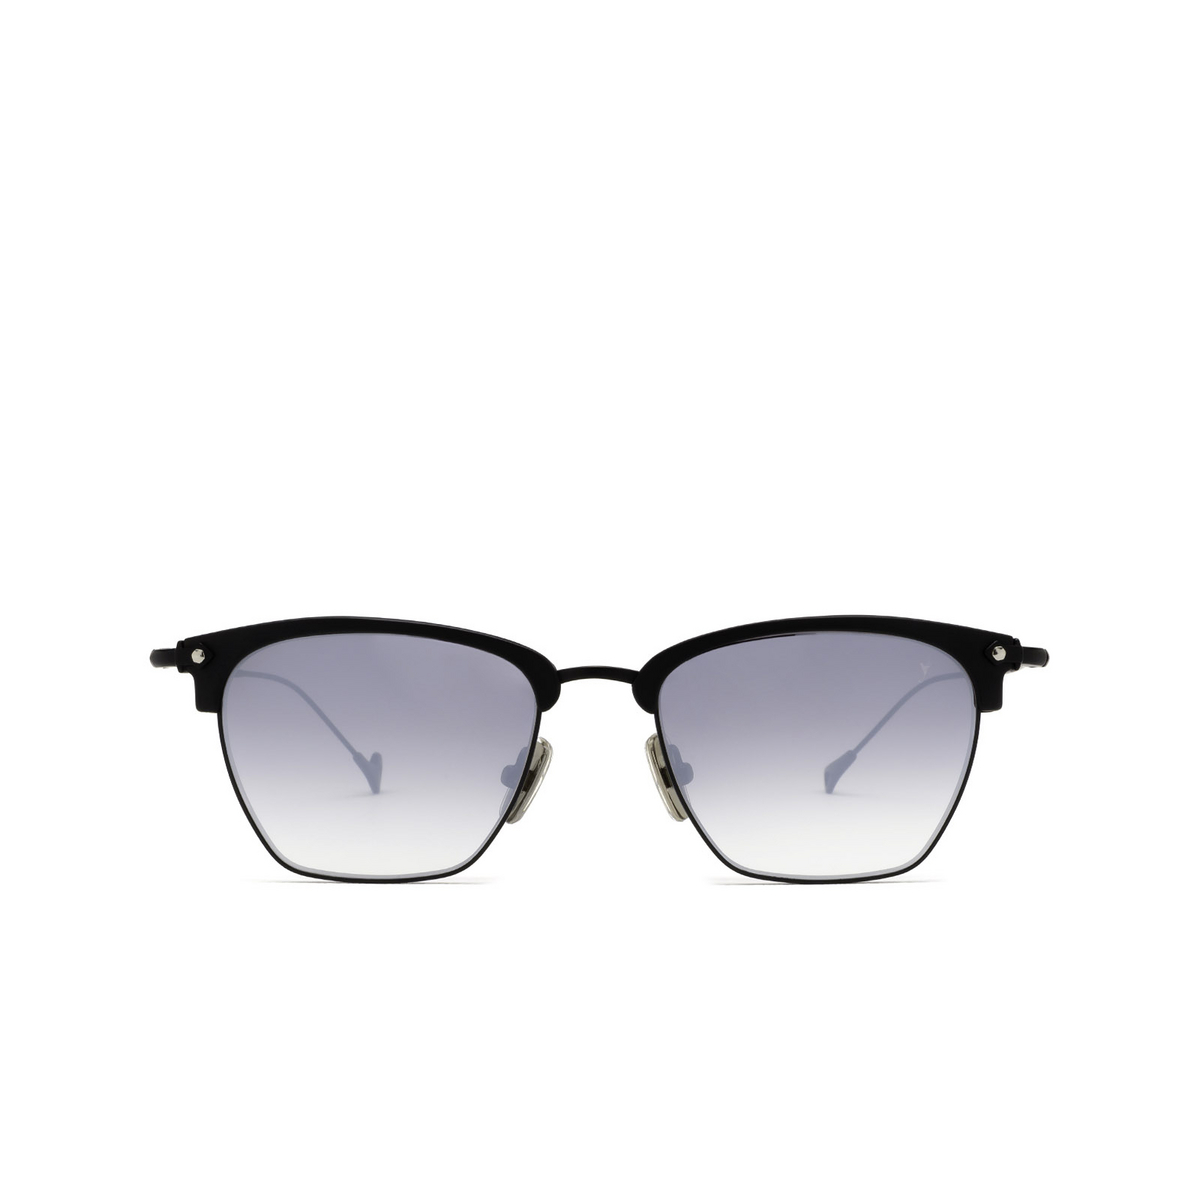 Eyepetizer® Irregular Sunglasses: Don color Black Matt C.A-6-27F - front view.